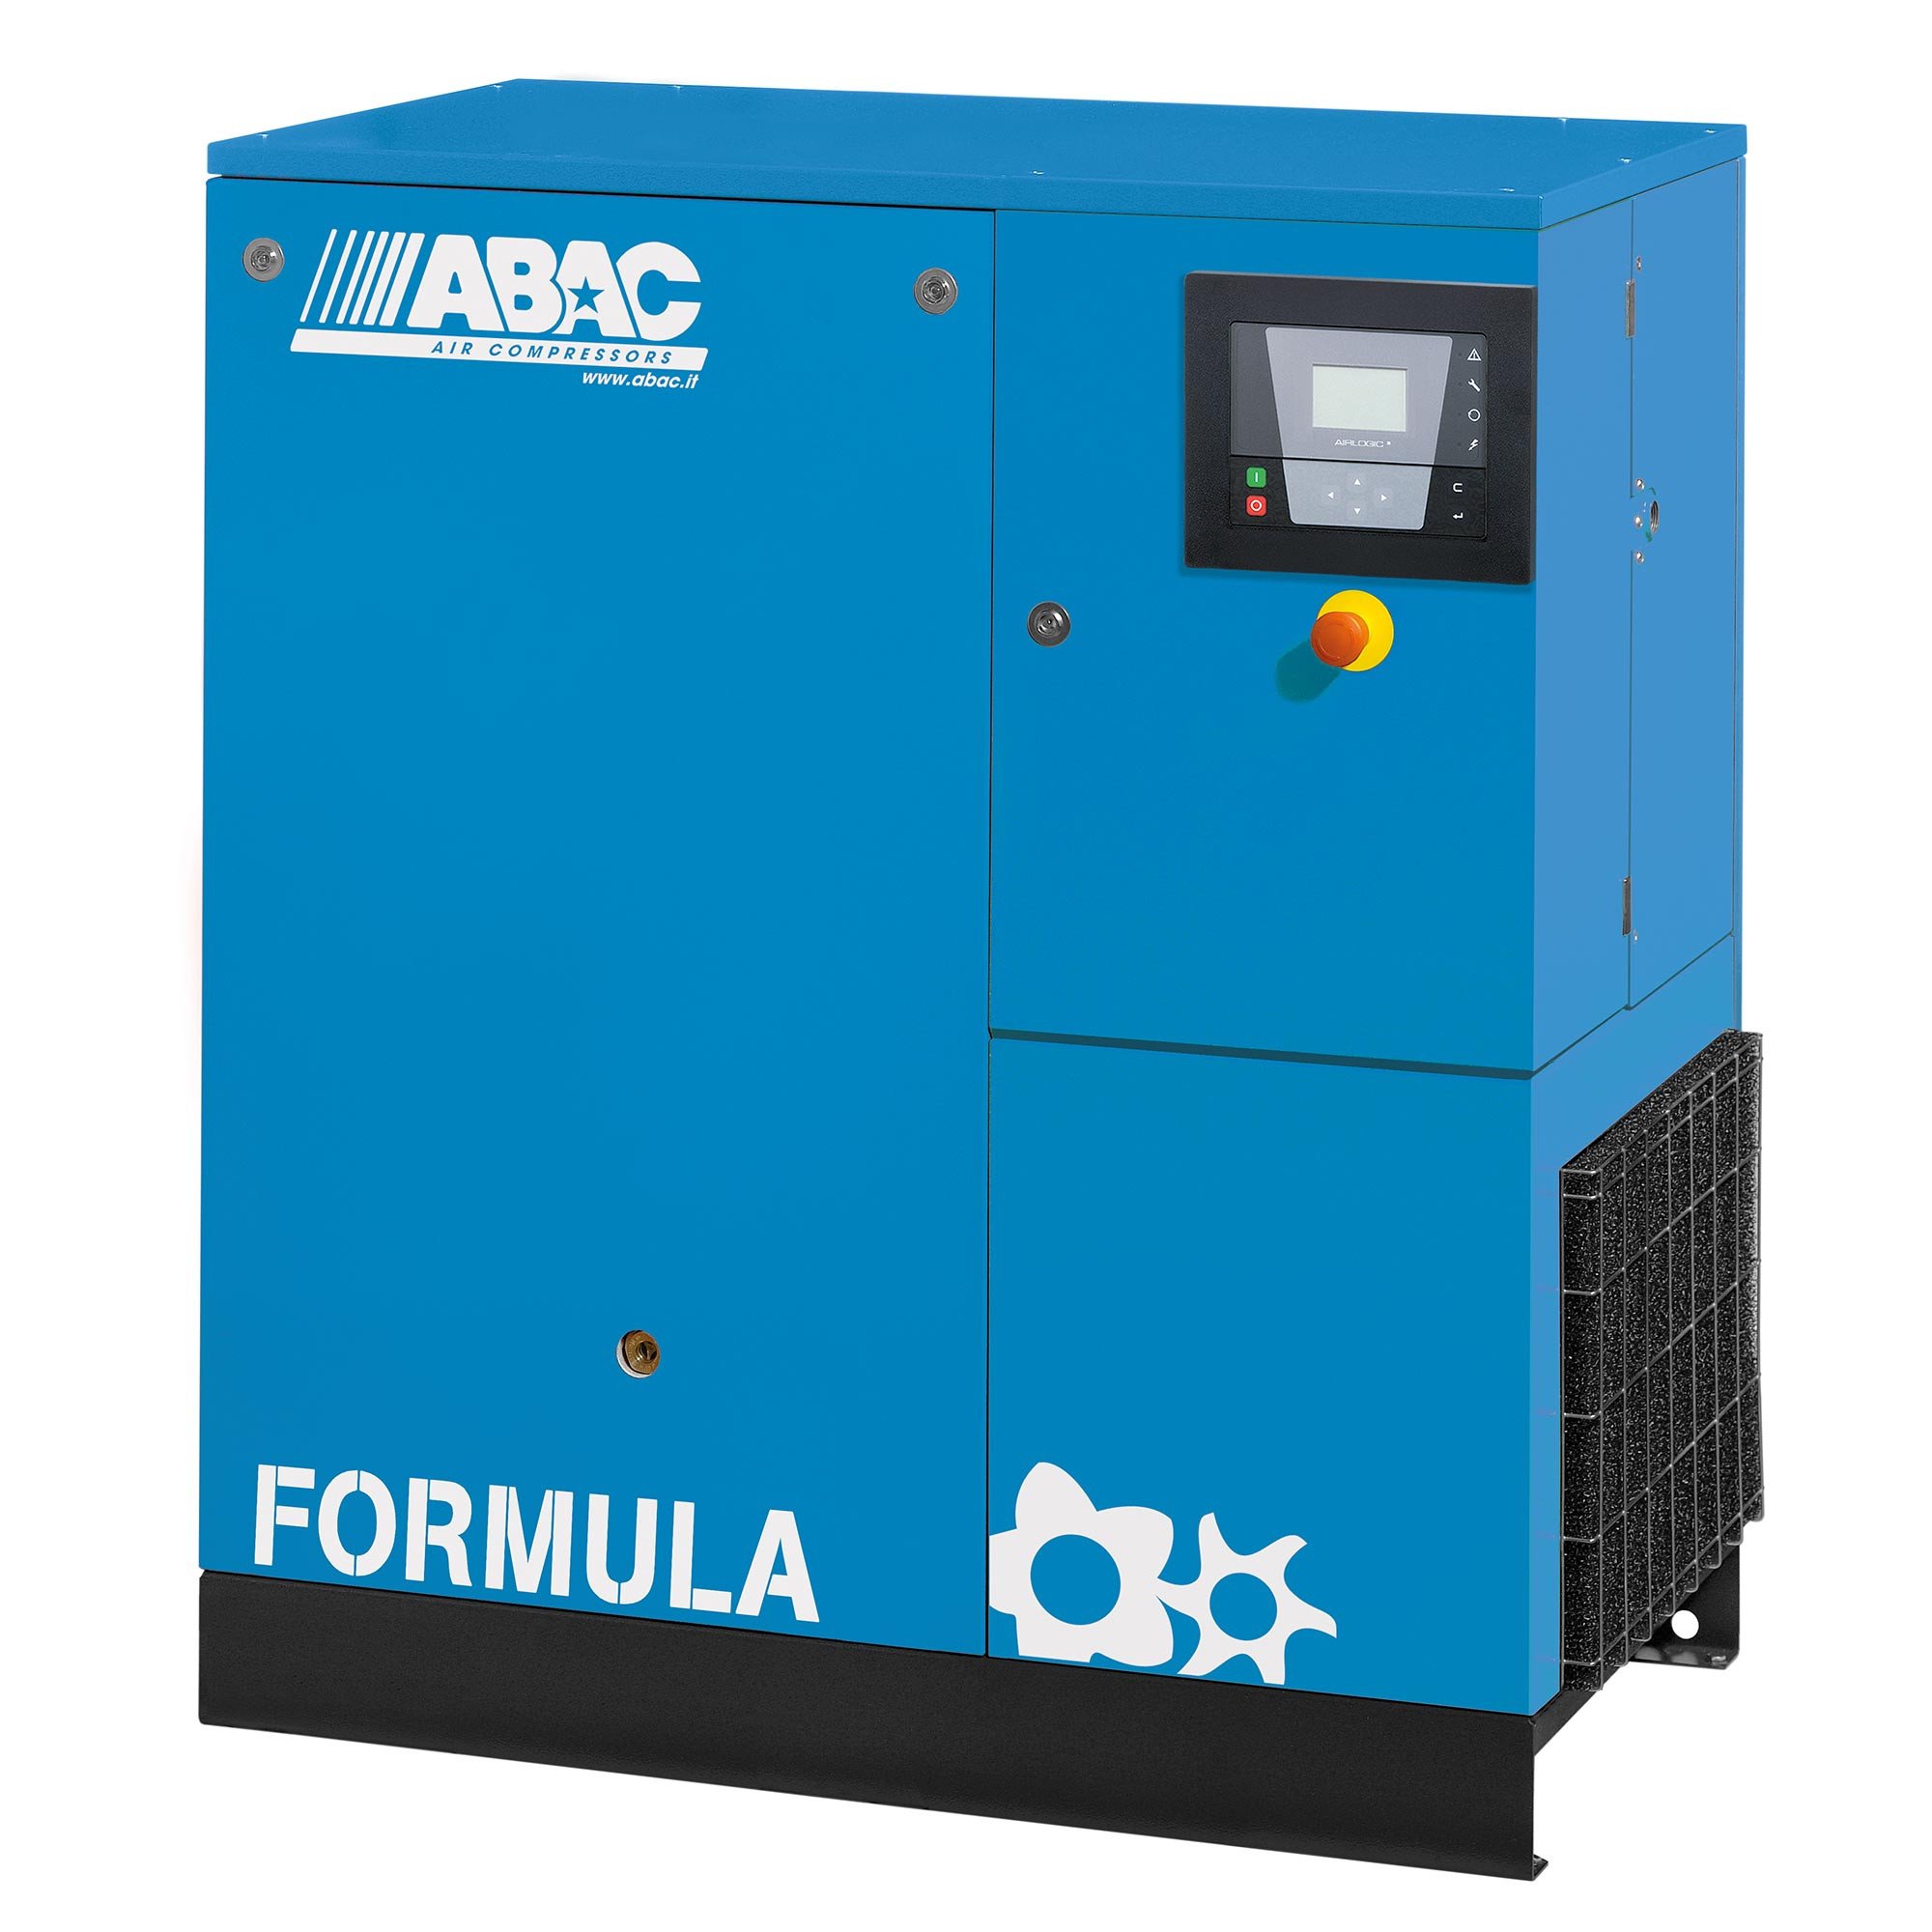 ABAC公式E 11千瓦固定转速螺杆式空气压缩机-基本单元带干燥机| 58.5 CFM